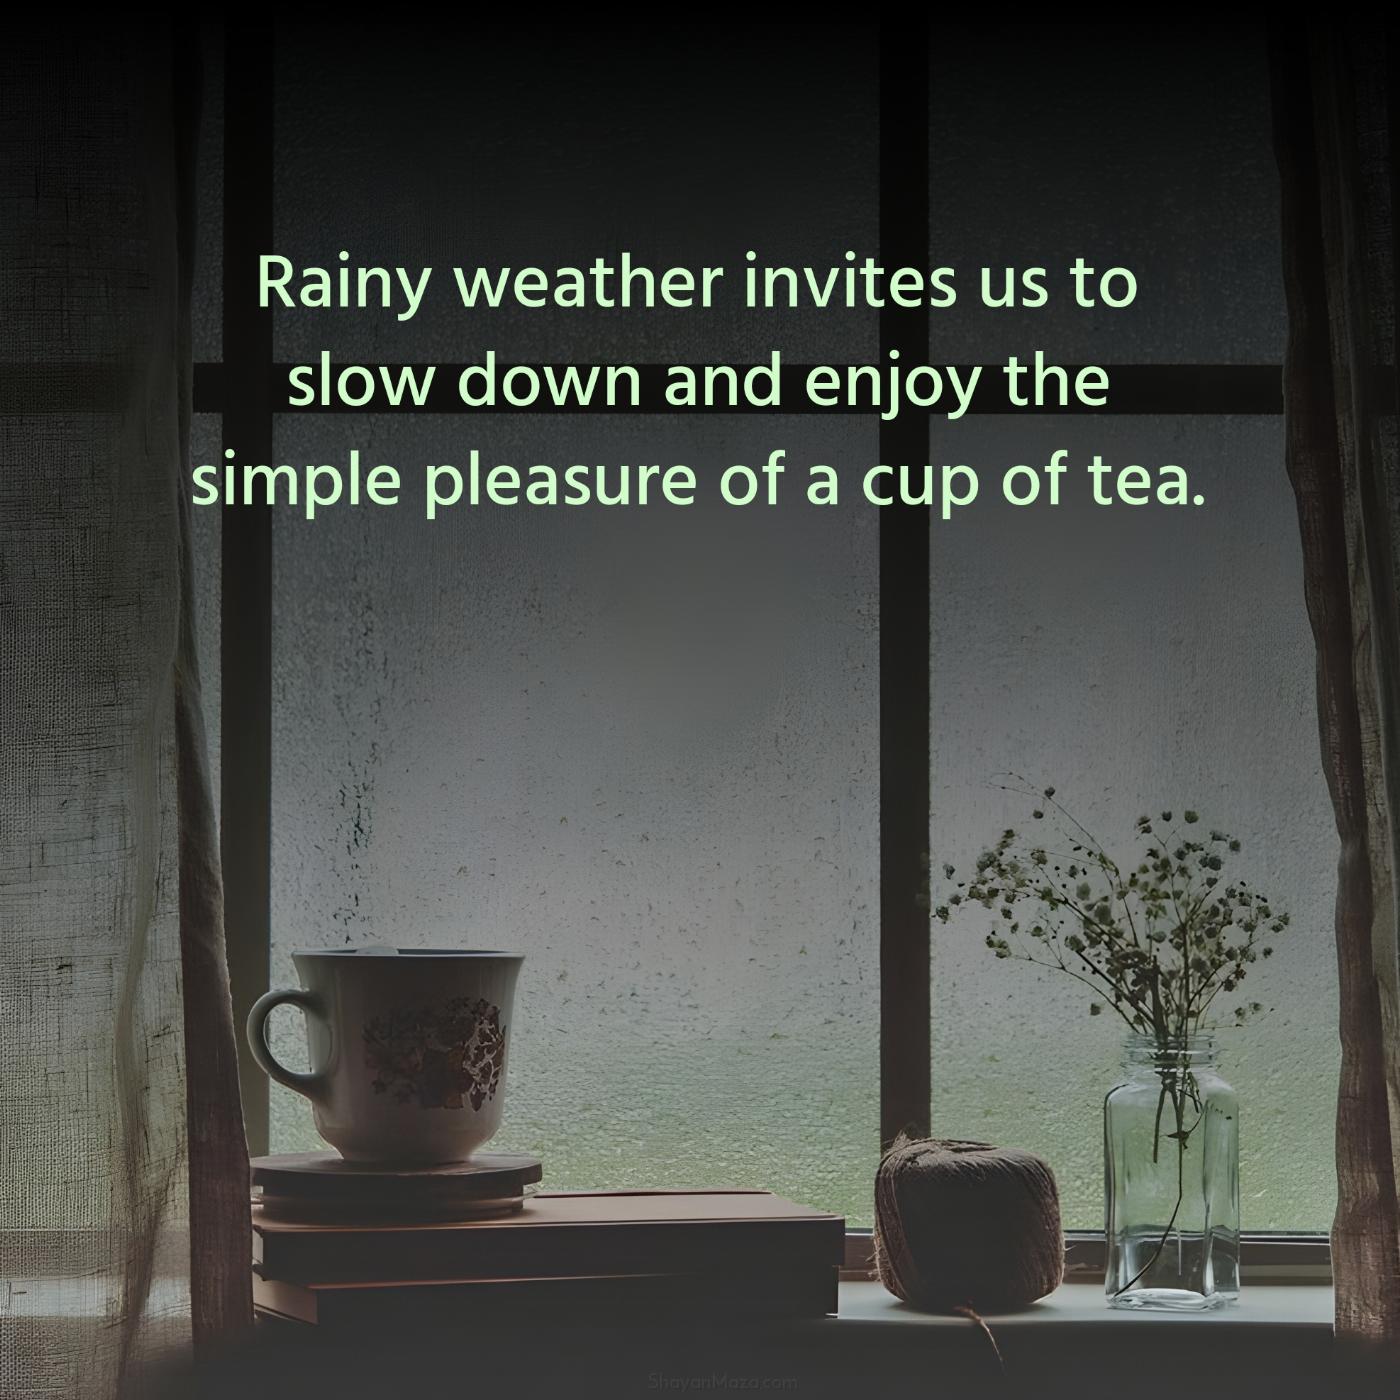 Rainy weather invites us to slow down and enjoy the simple pleasure